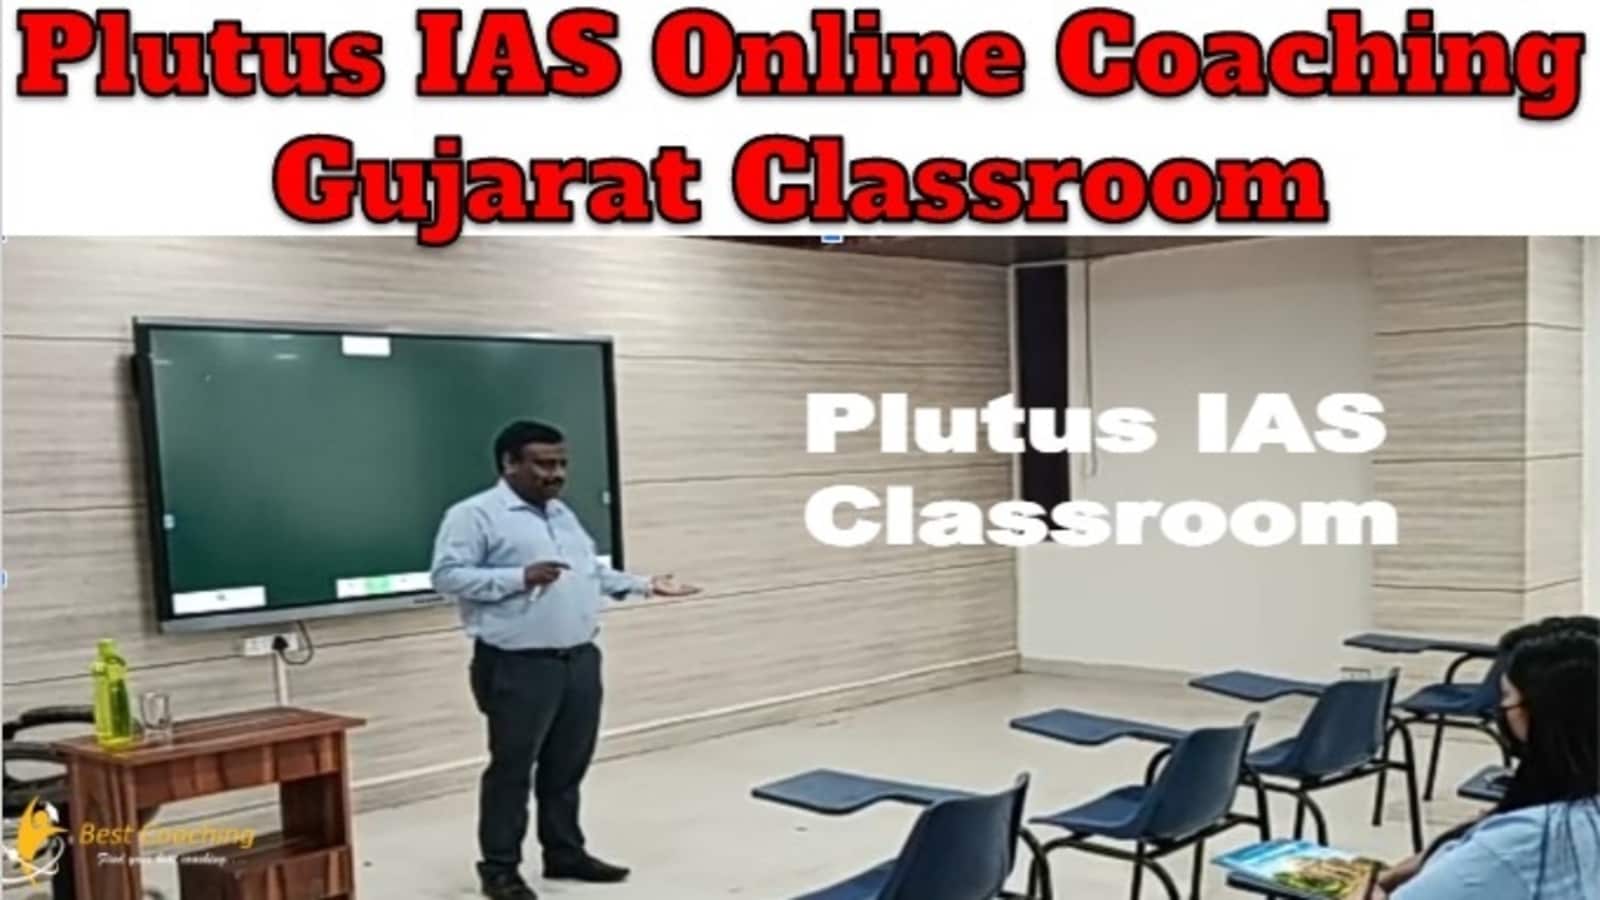 Plutus IAS Online Coaching Gujarat Classroom